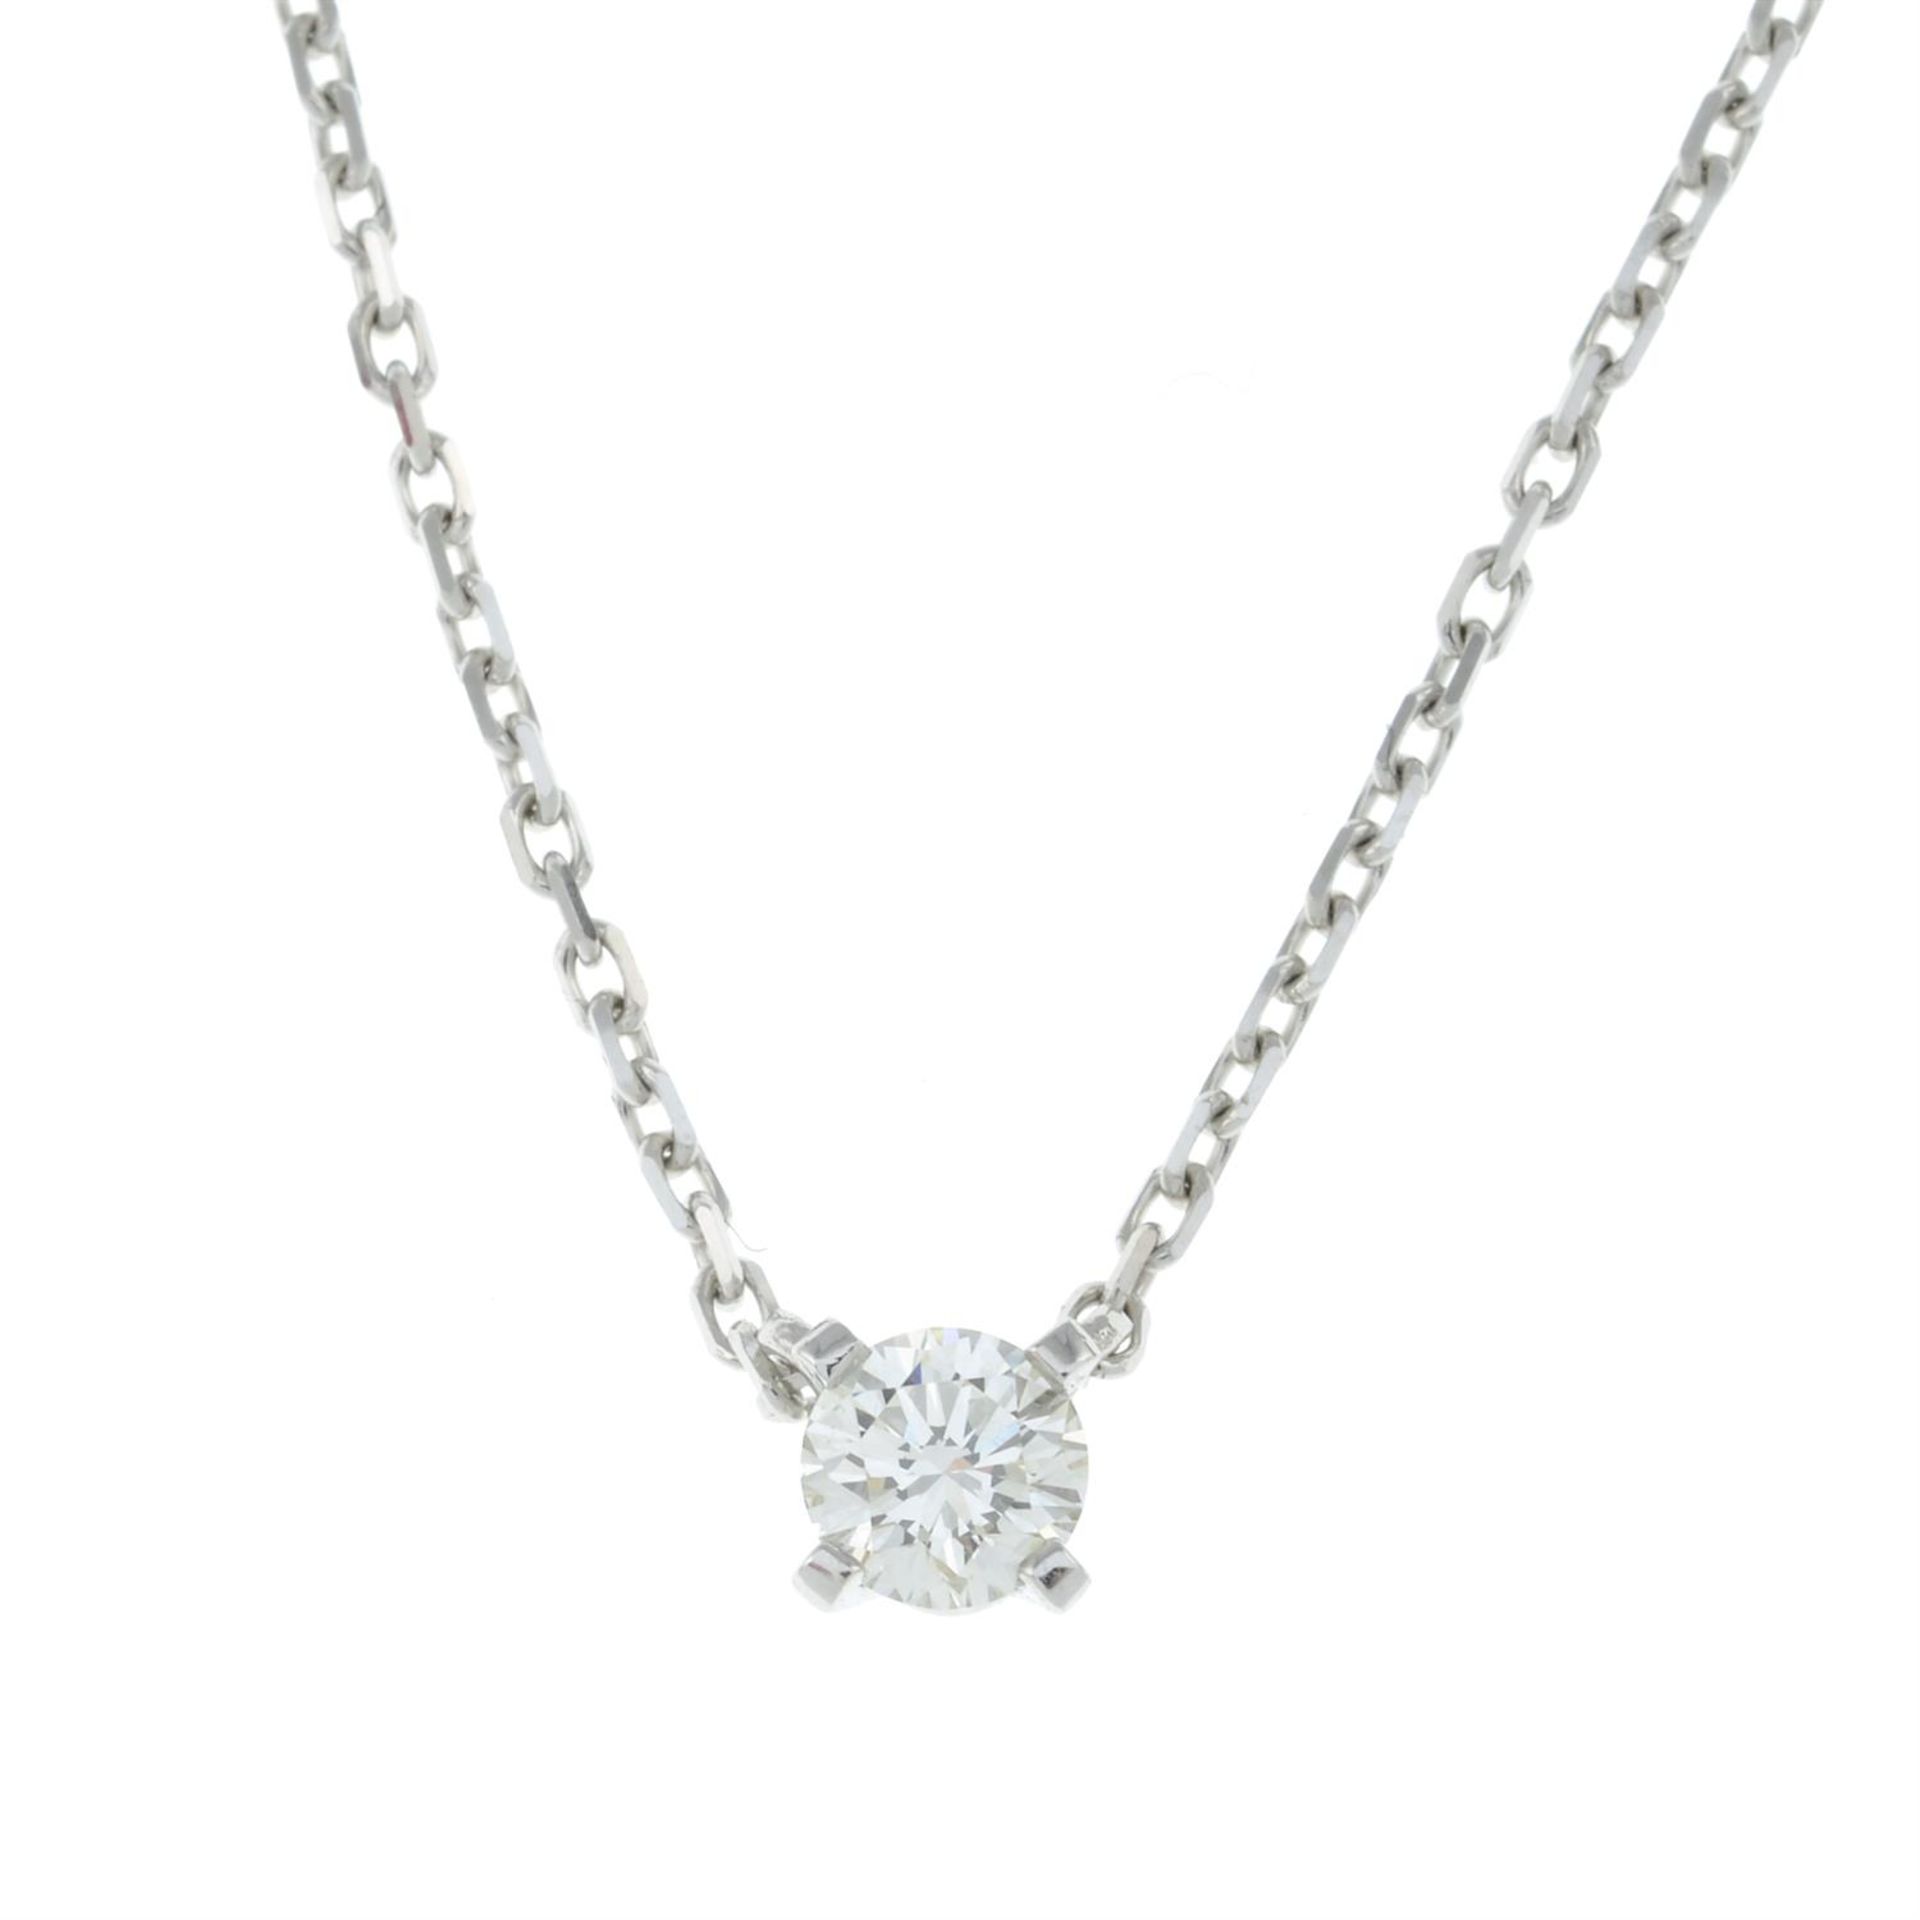 Diamond pendant, on chain, Cartier.